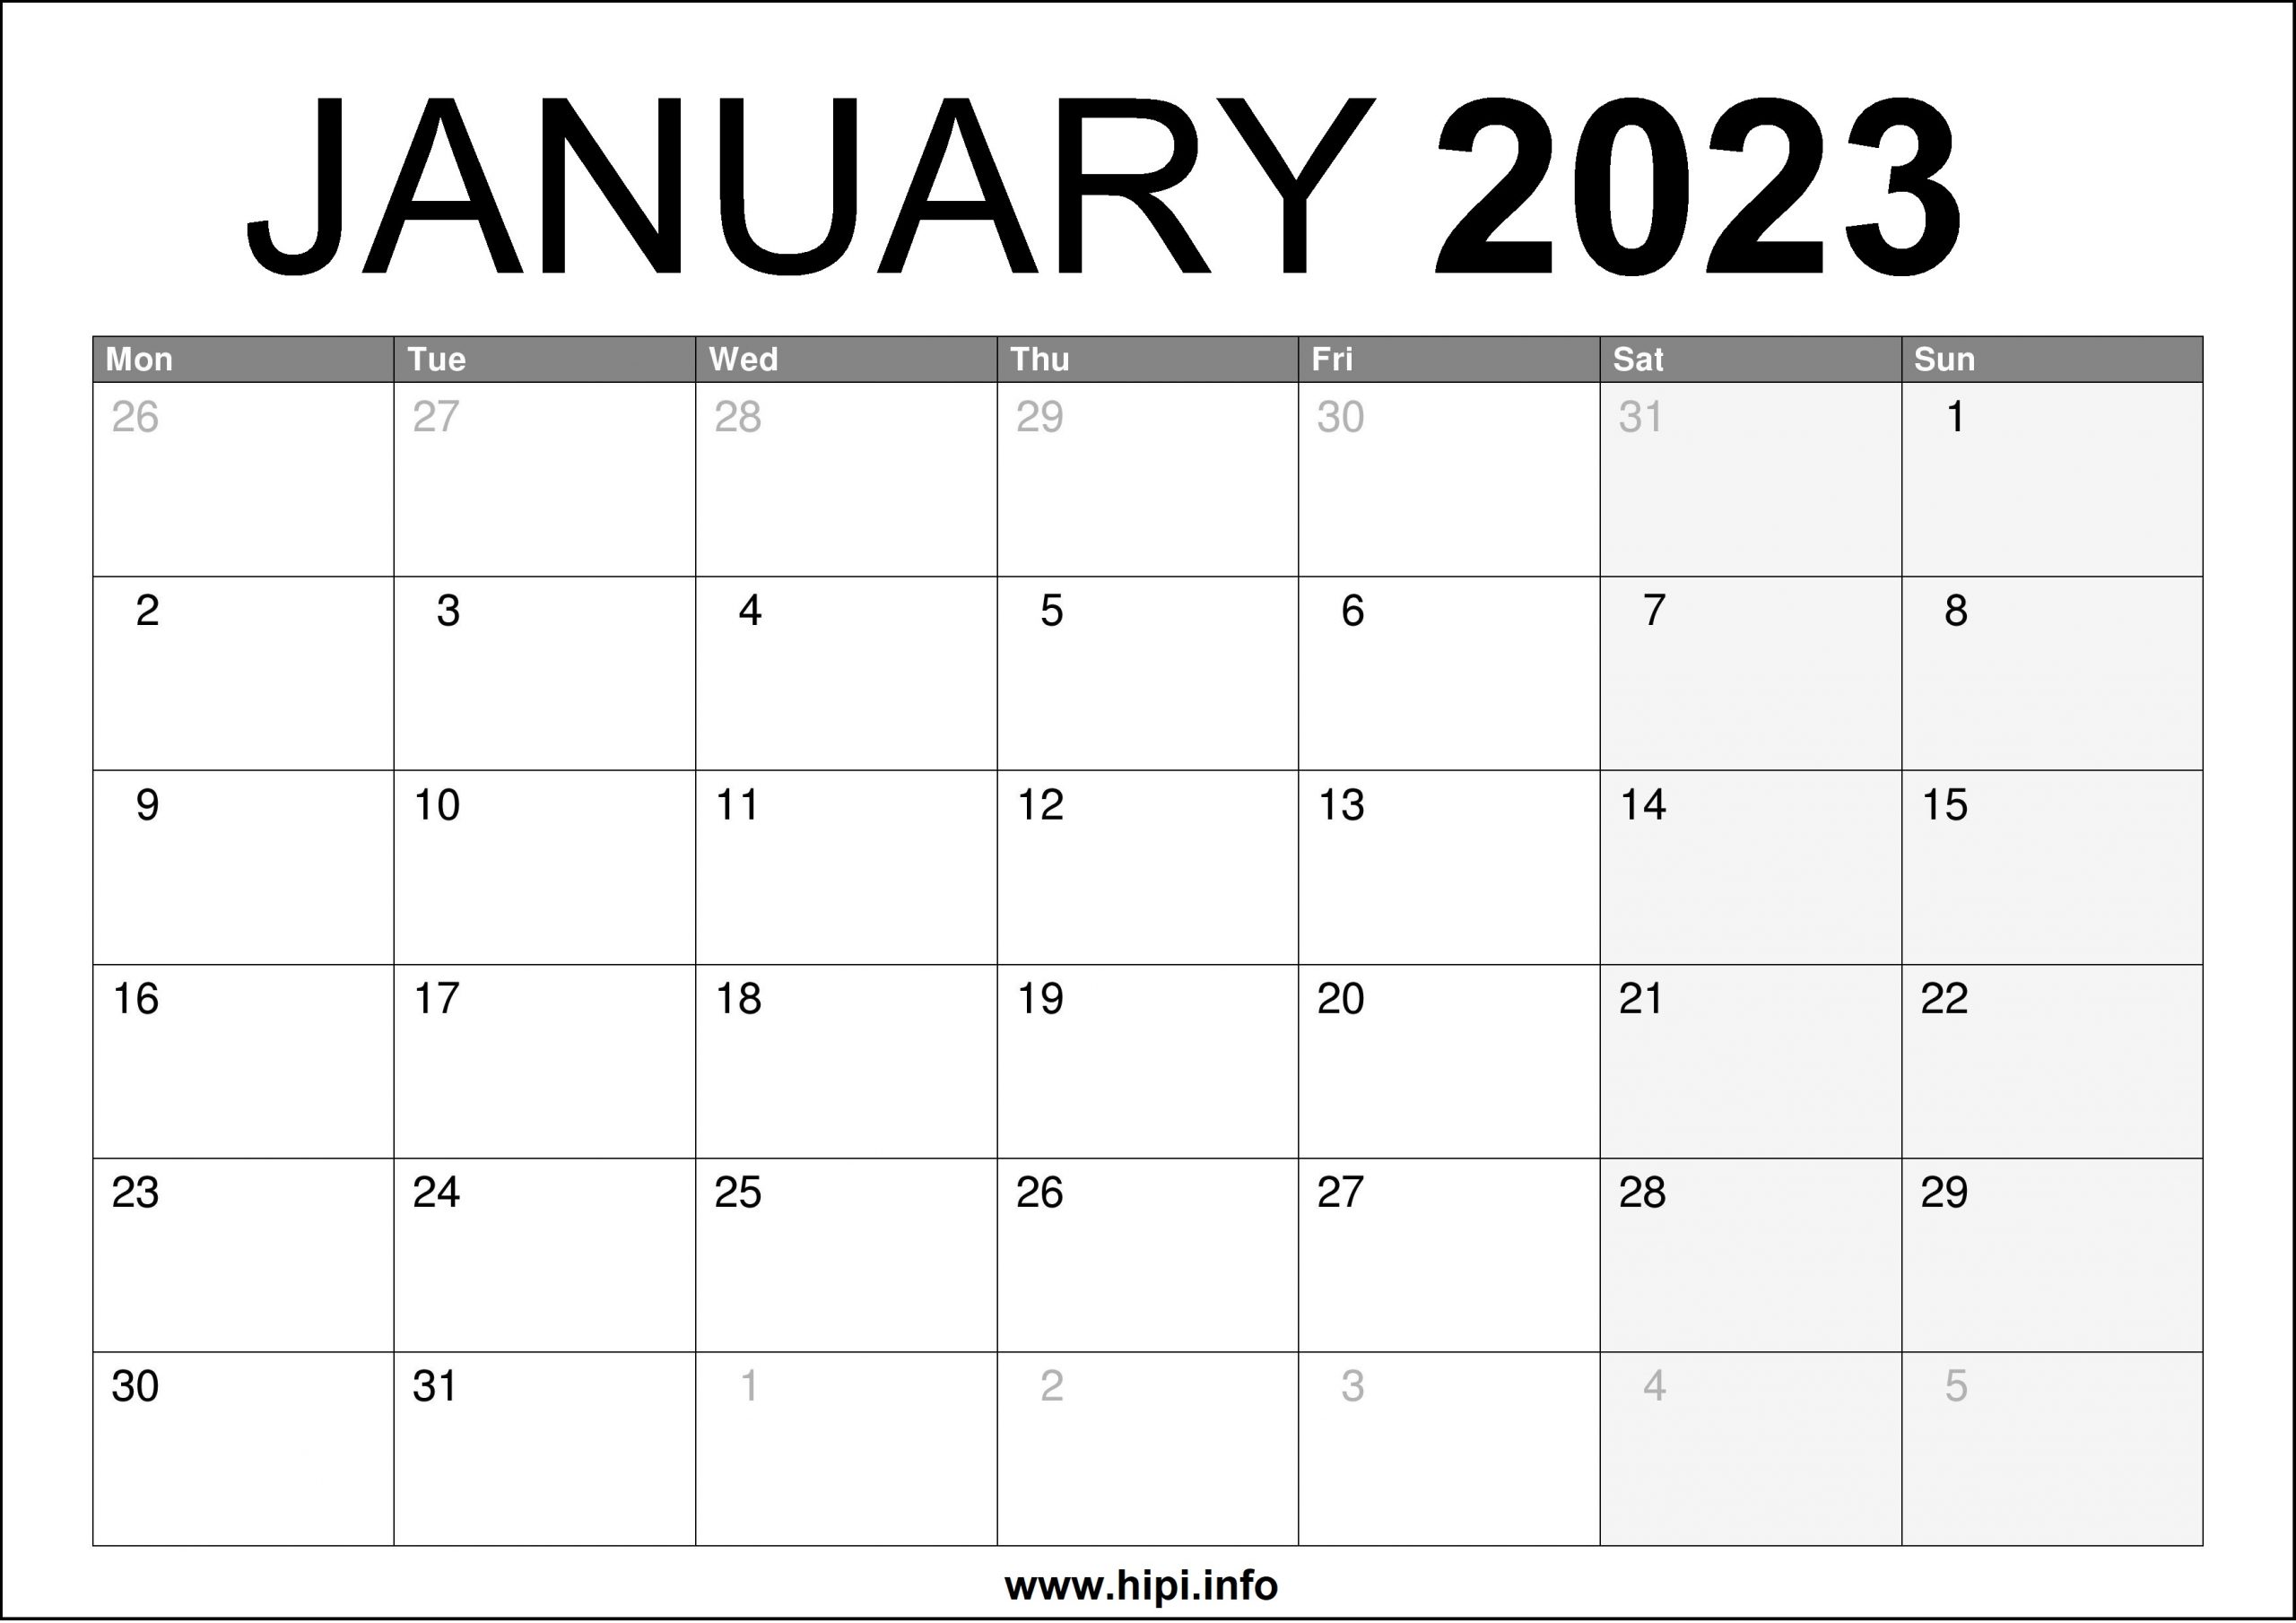 january-2023-uk-calendar-printable-free-hipi-info-calendars